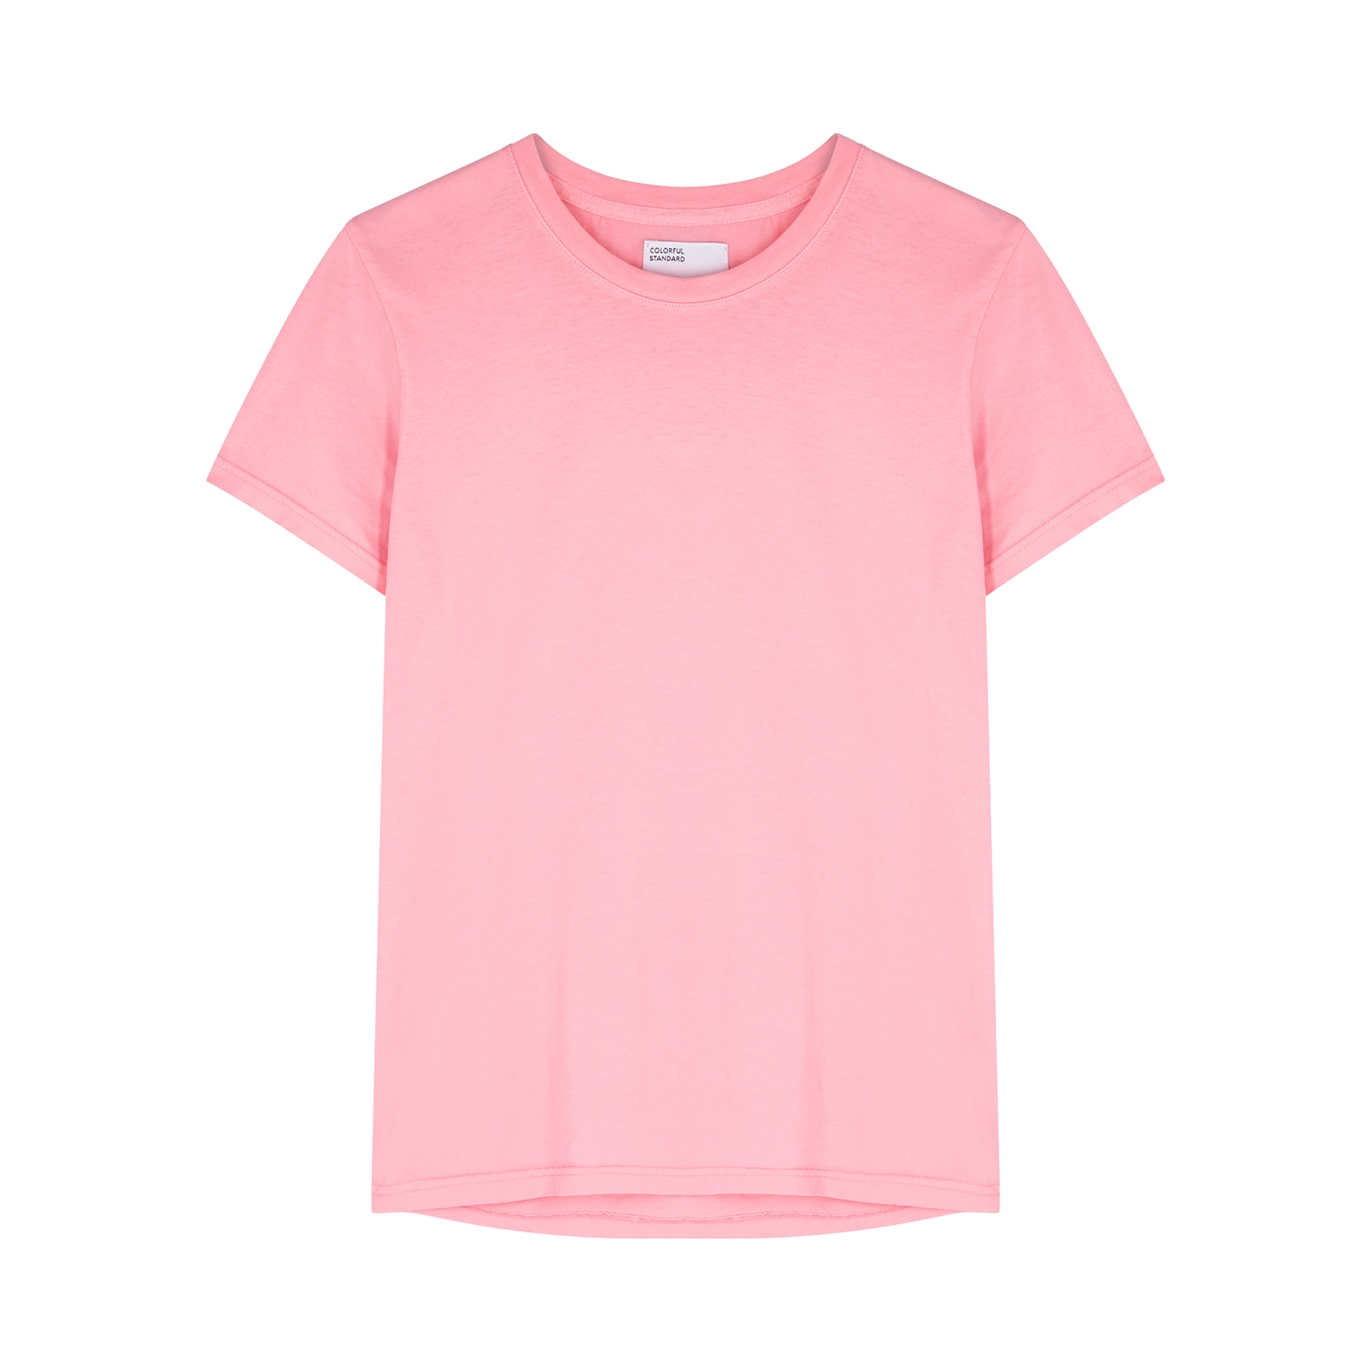 Colorful Standard Light Pink Cotton T-shirt